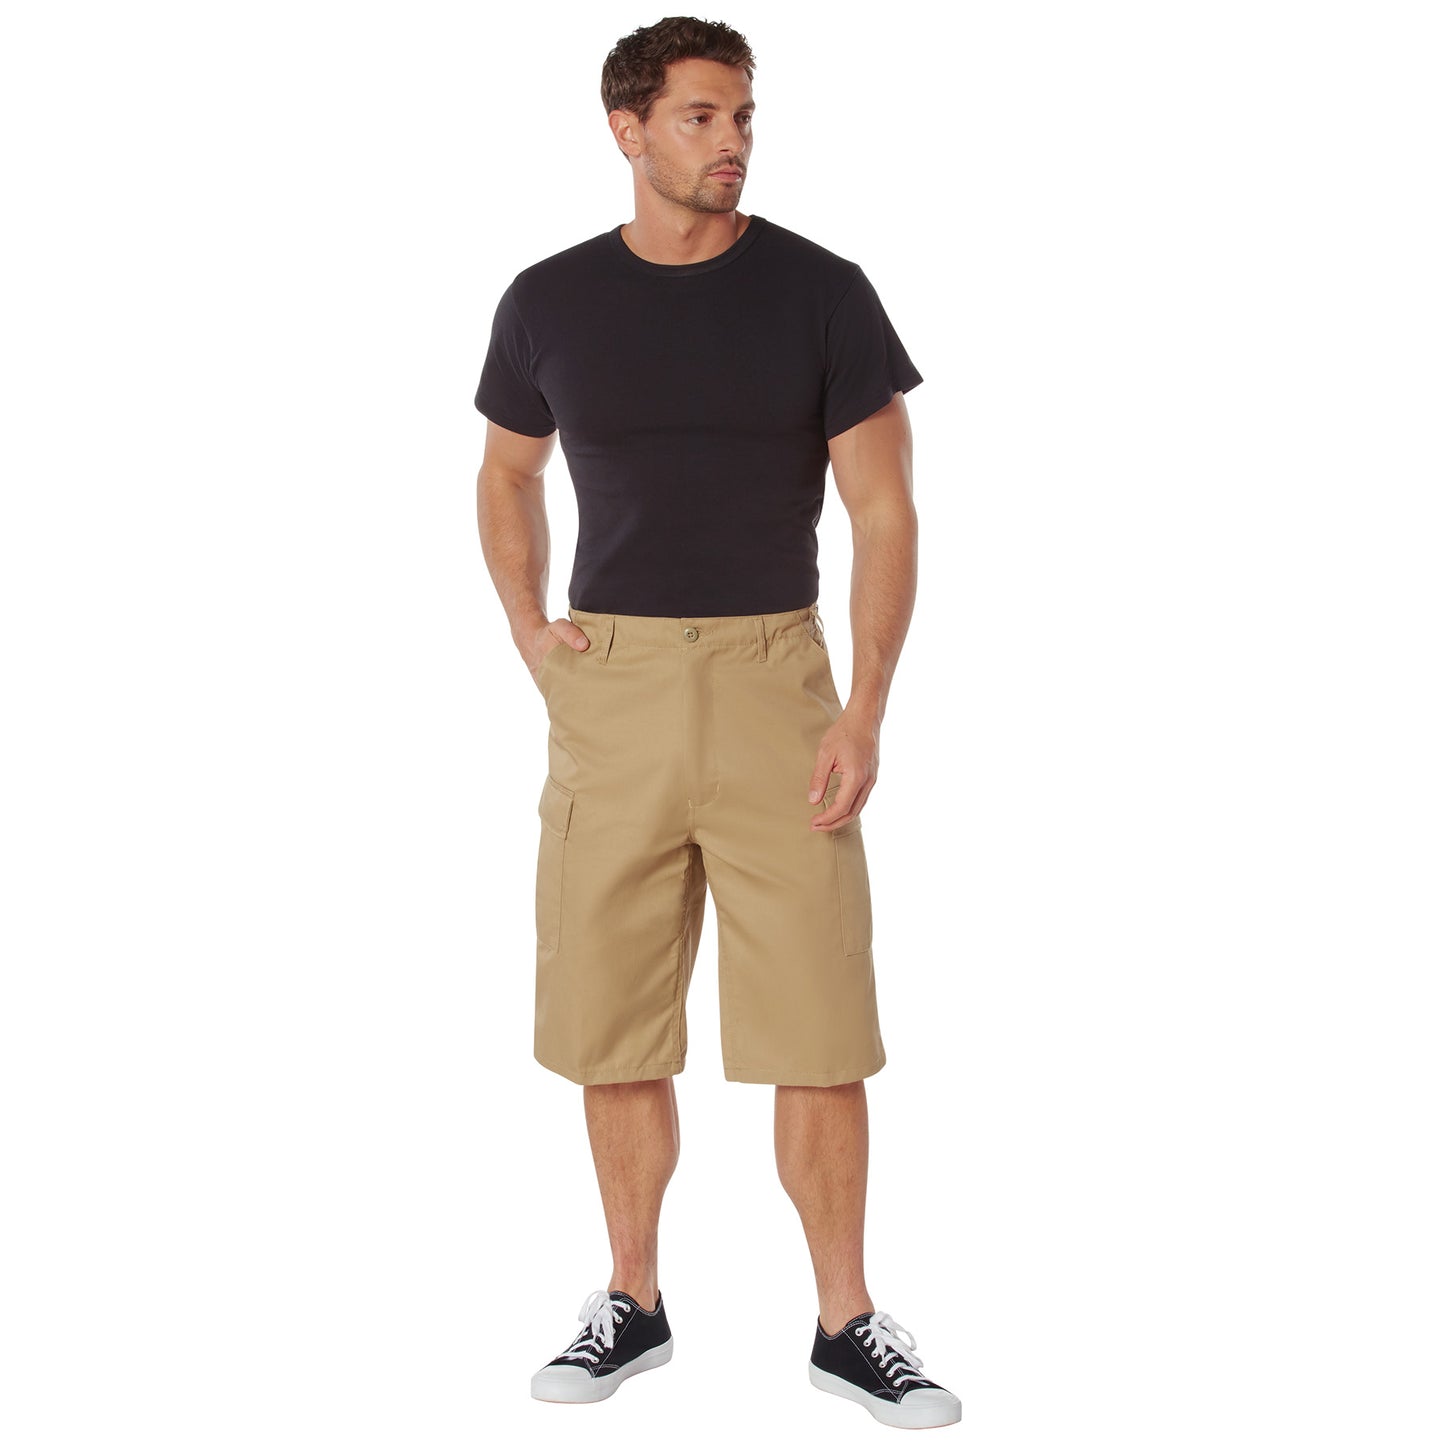 Rothco Long Length BDU Shorts